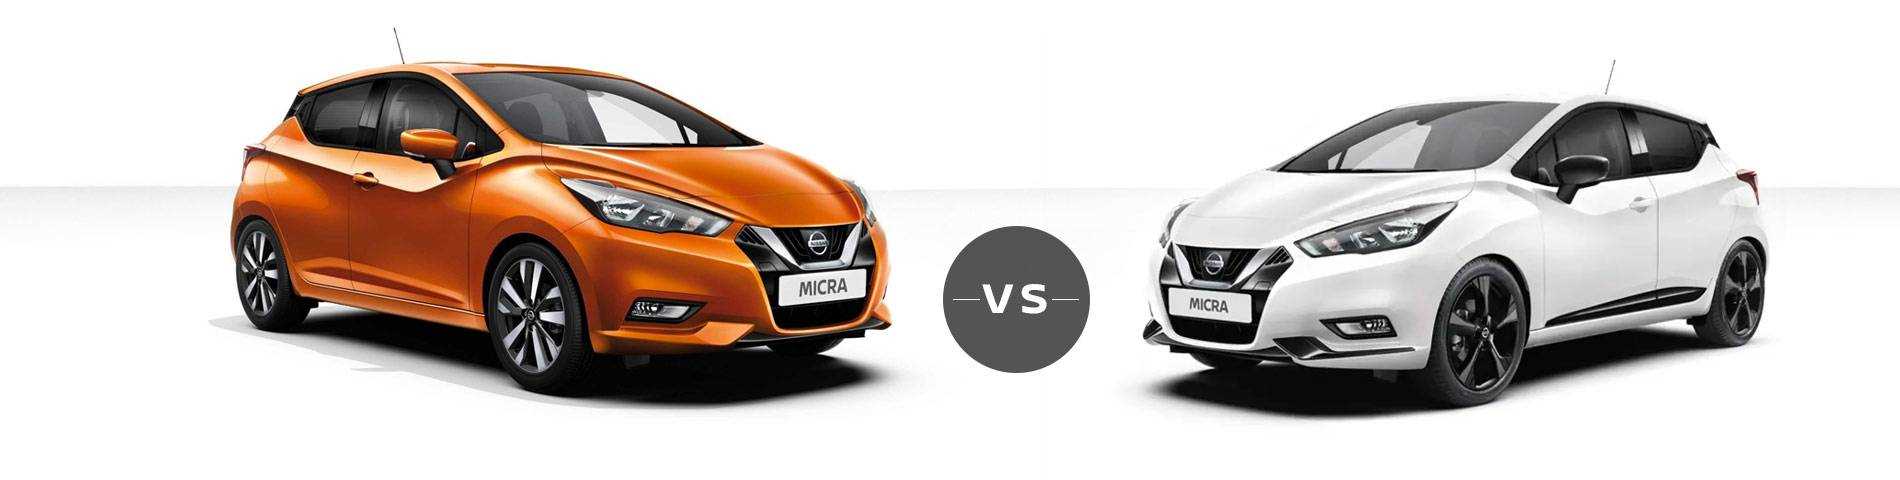 Nissan Micra vs Nissan Micra N-Sport